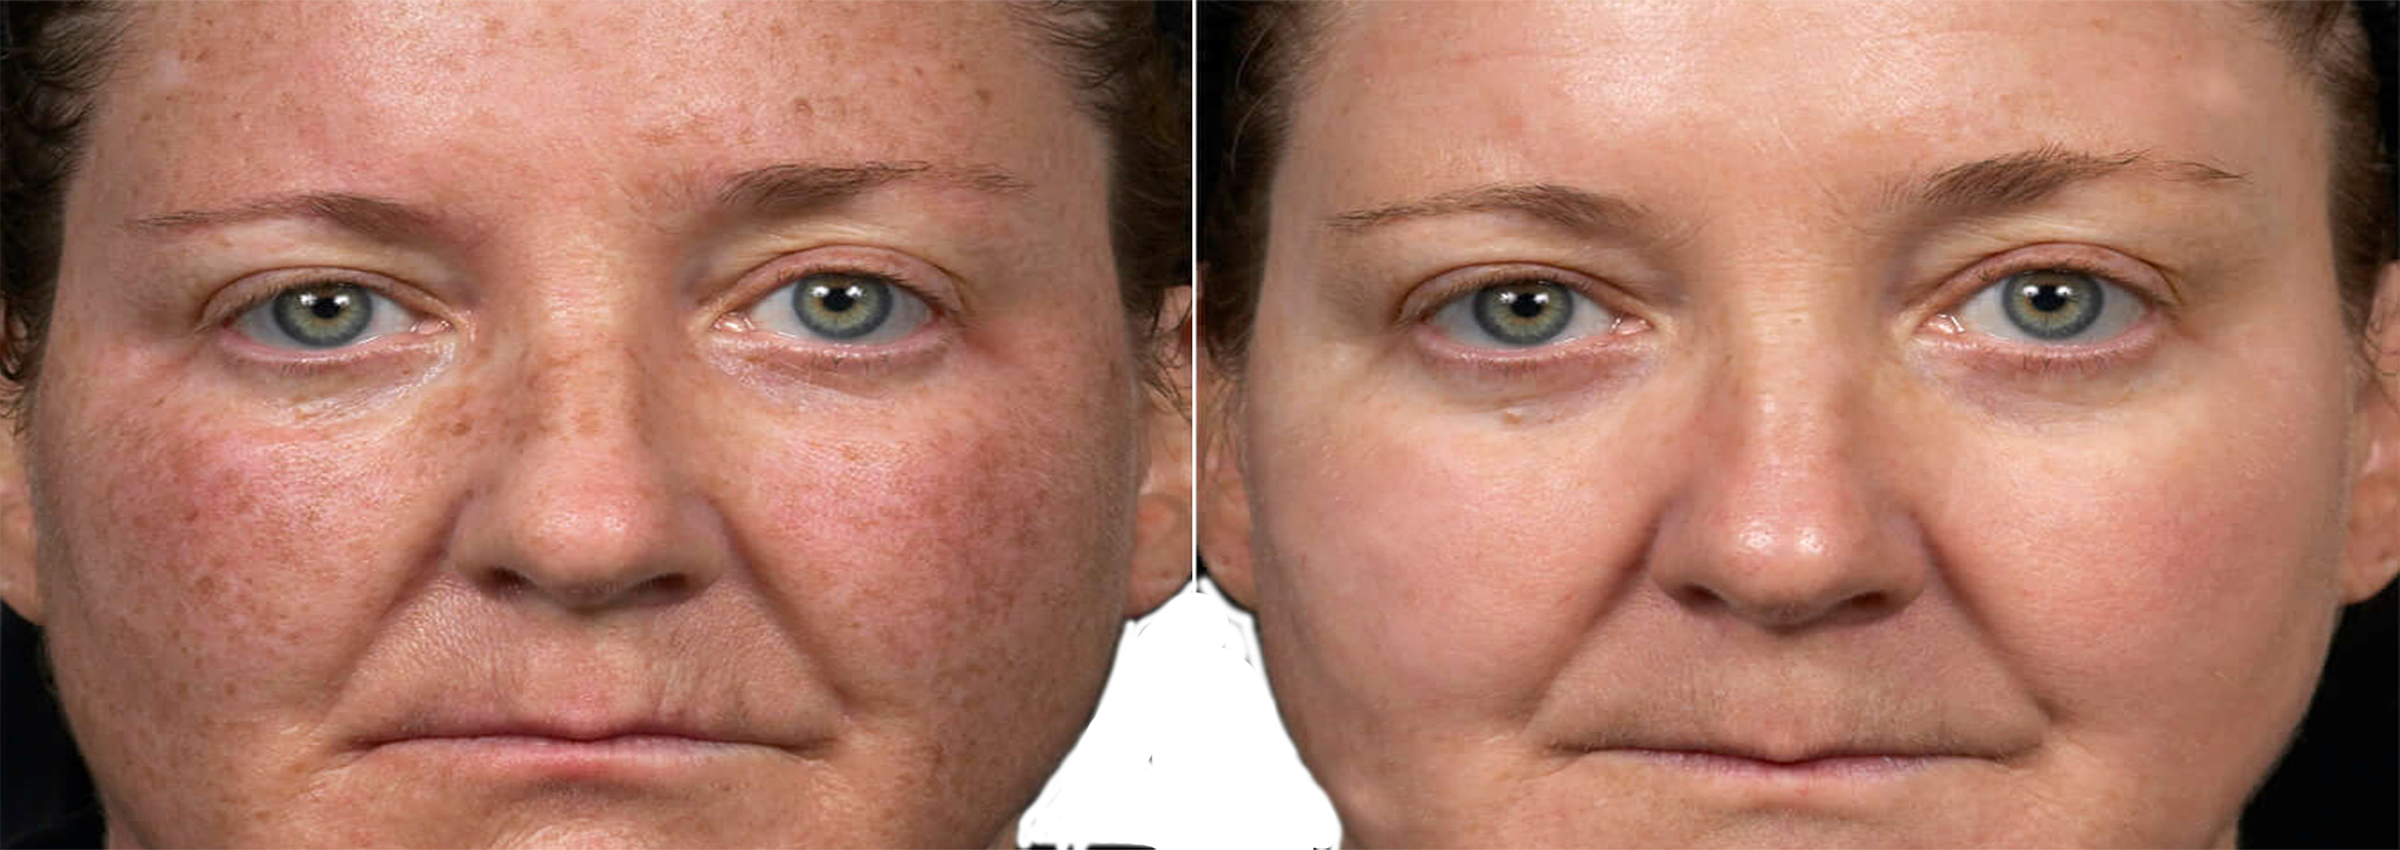 Long Island color correction and skin rejuvenation before after